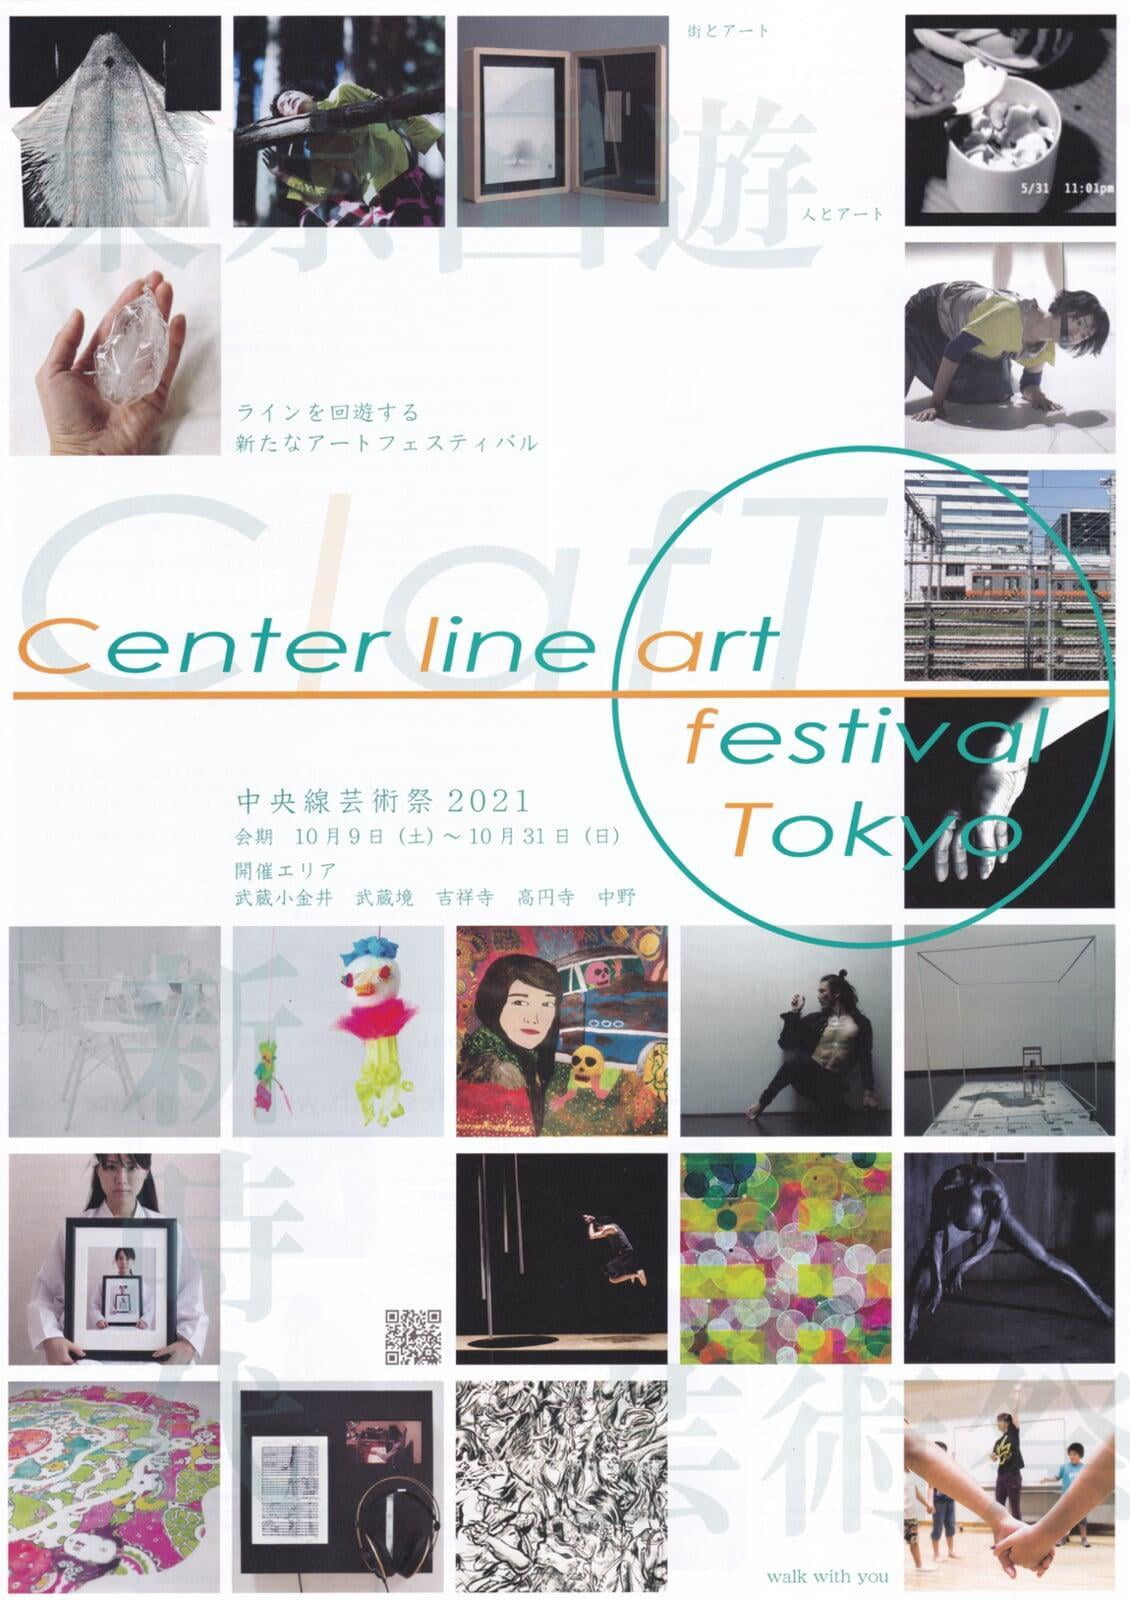 中央線芸術祭2021　Center line art festival Tokyo　参加・出展